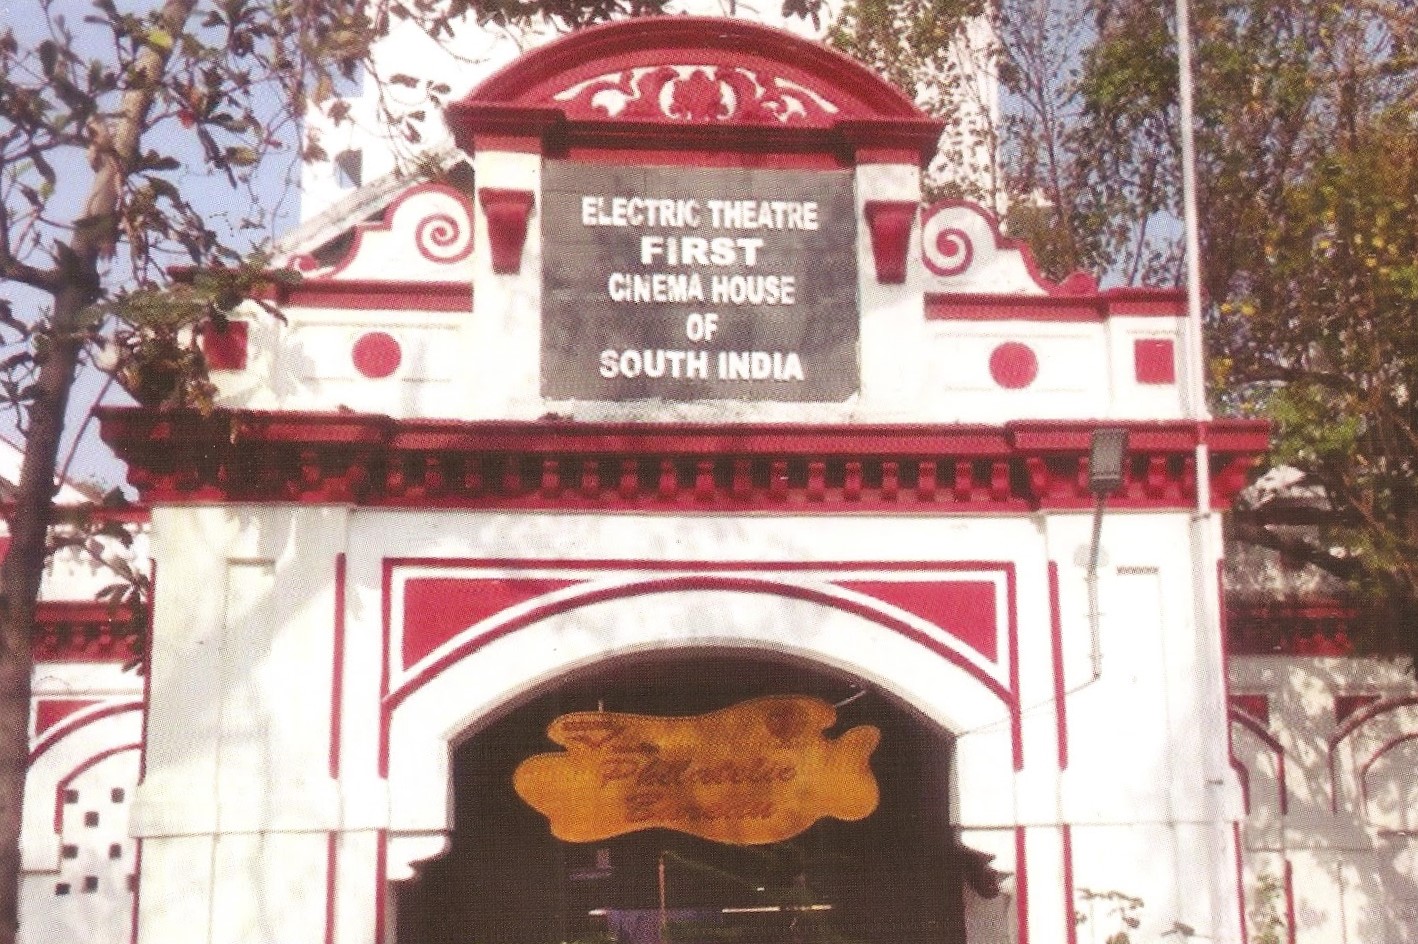 Movie Theatres in Madras of yore